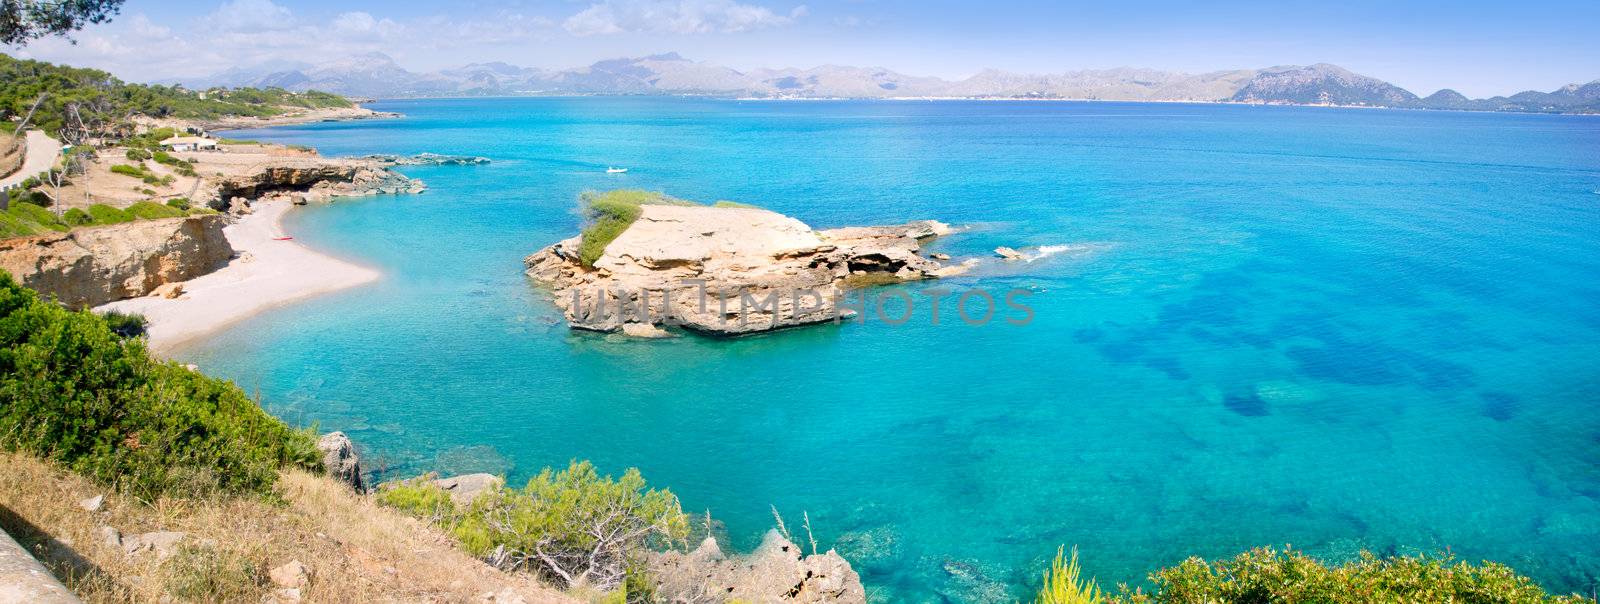 Alcudia Mallorca Playa de S Illot transparent turquoise water by lunamarina